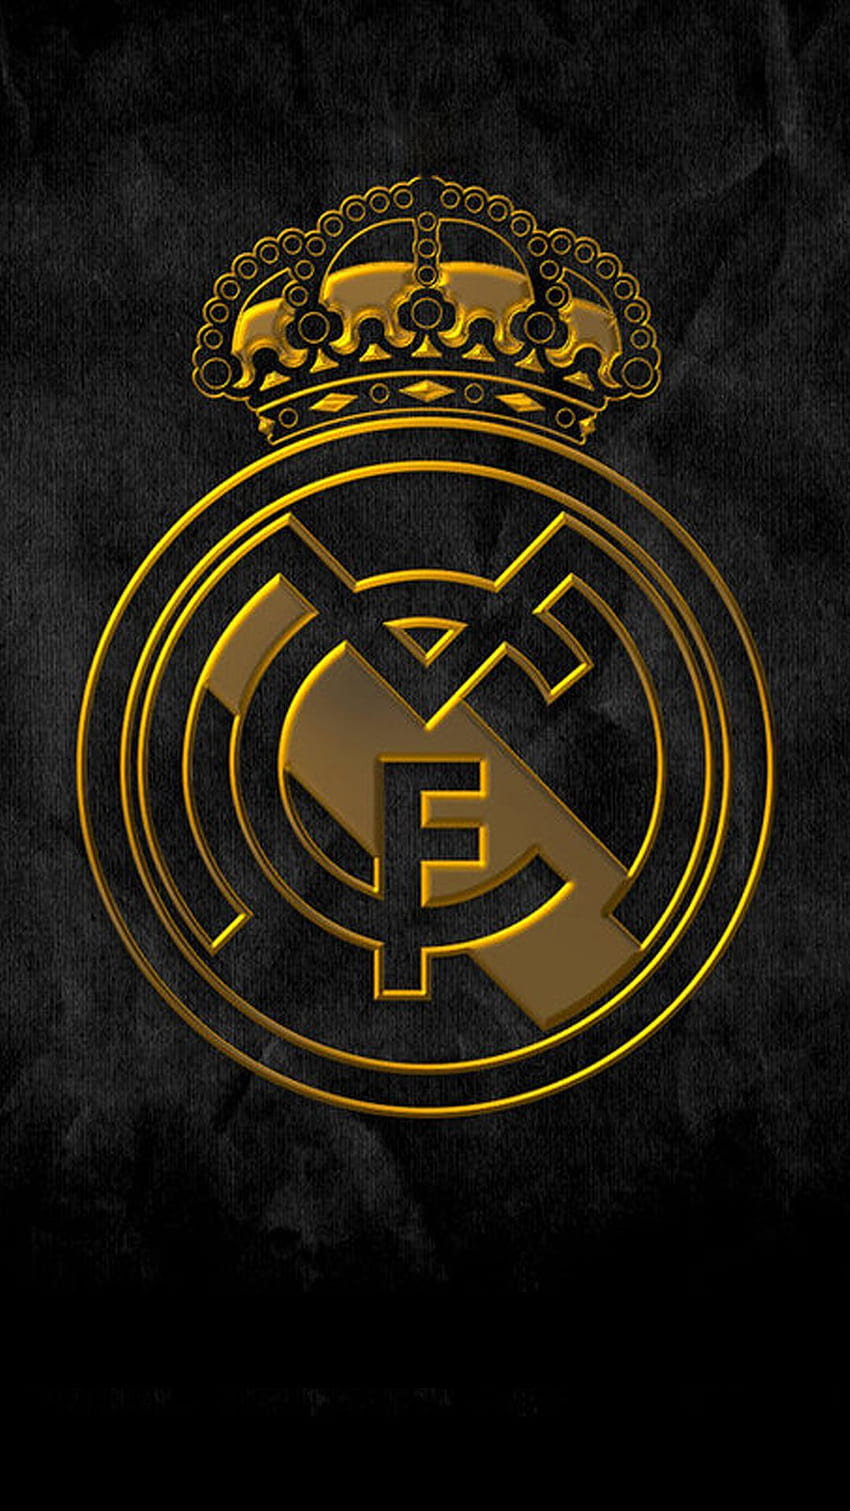 HALA MADRID WIR SIND REAL, HALA MADRID WIR SIND REAL, HALA MADRID WIR SIND REAL. Madrid, Real Madrid, Real Madrid-Logo HD-Handy-Hintergrundbild